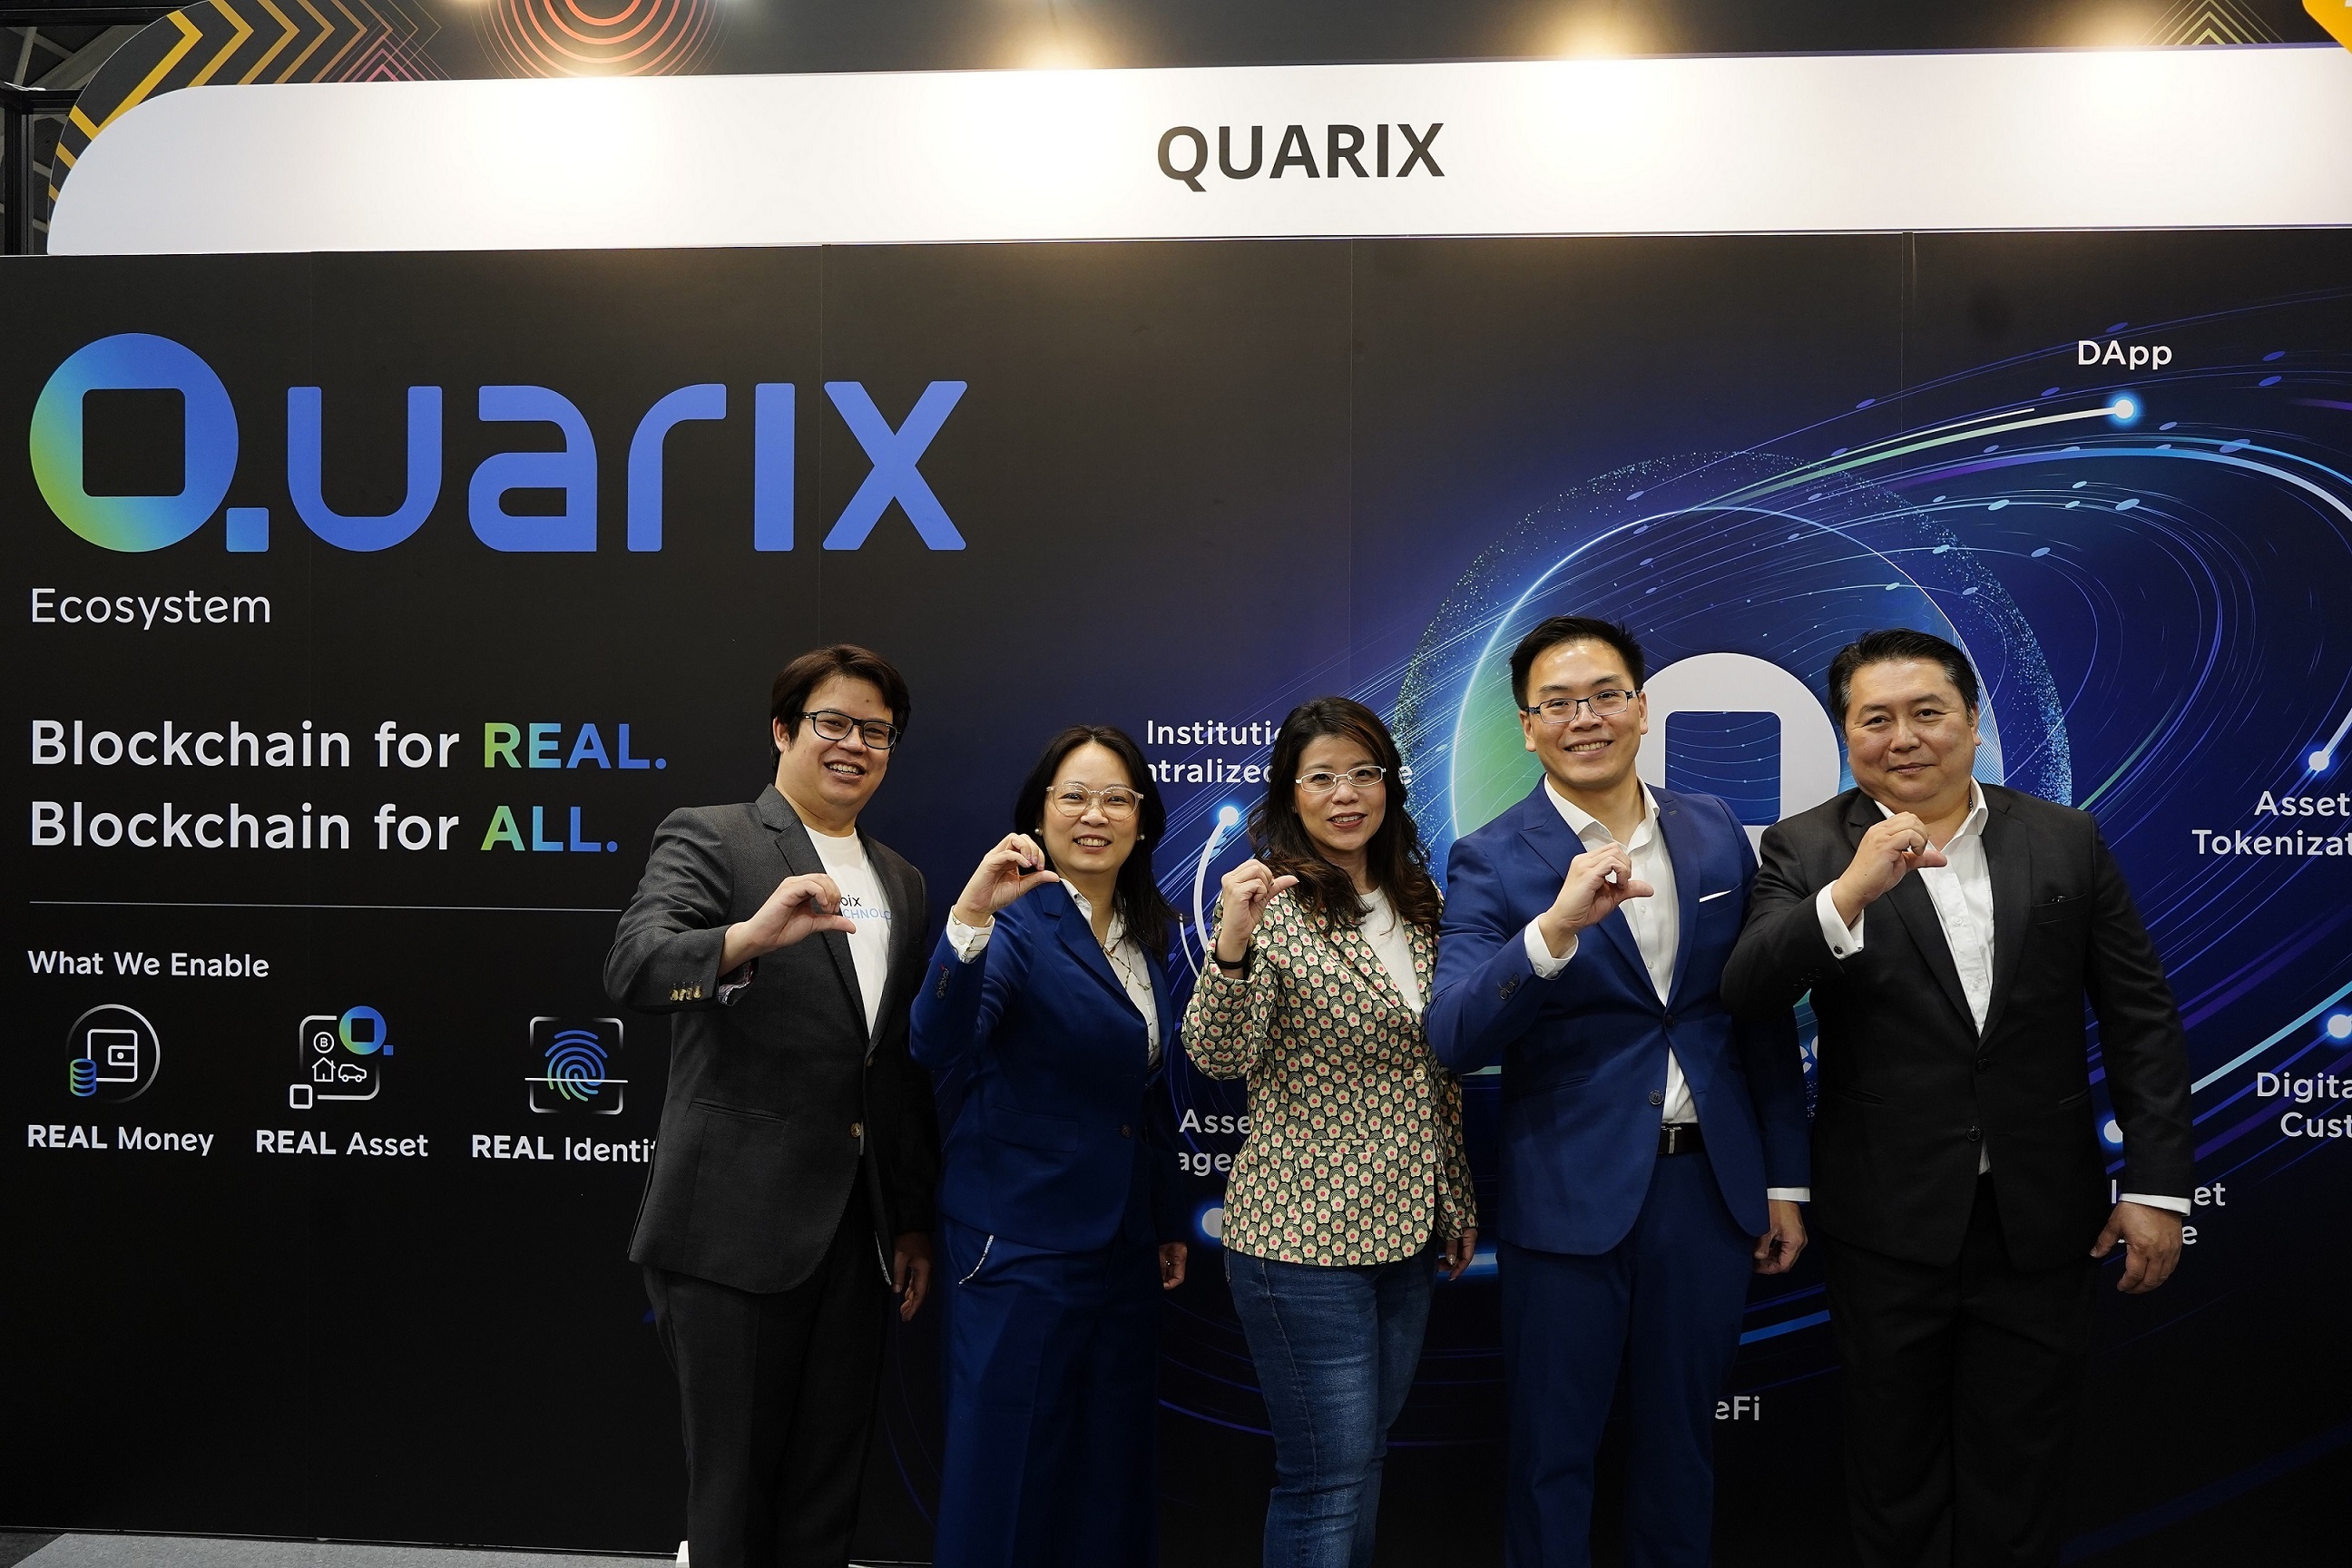 Orbix Tech เปิดตัว Quarix chain ภายใต้แนวคิด Blockchain for REAL. Blockchain for ALL. มุ่งสู่บล็อกเชนระดับภูมิภาคที่น่าเชื่อถือ